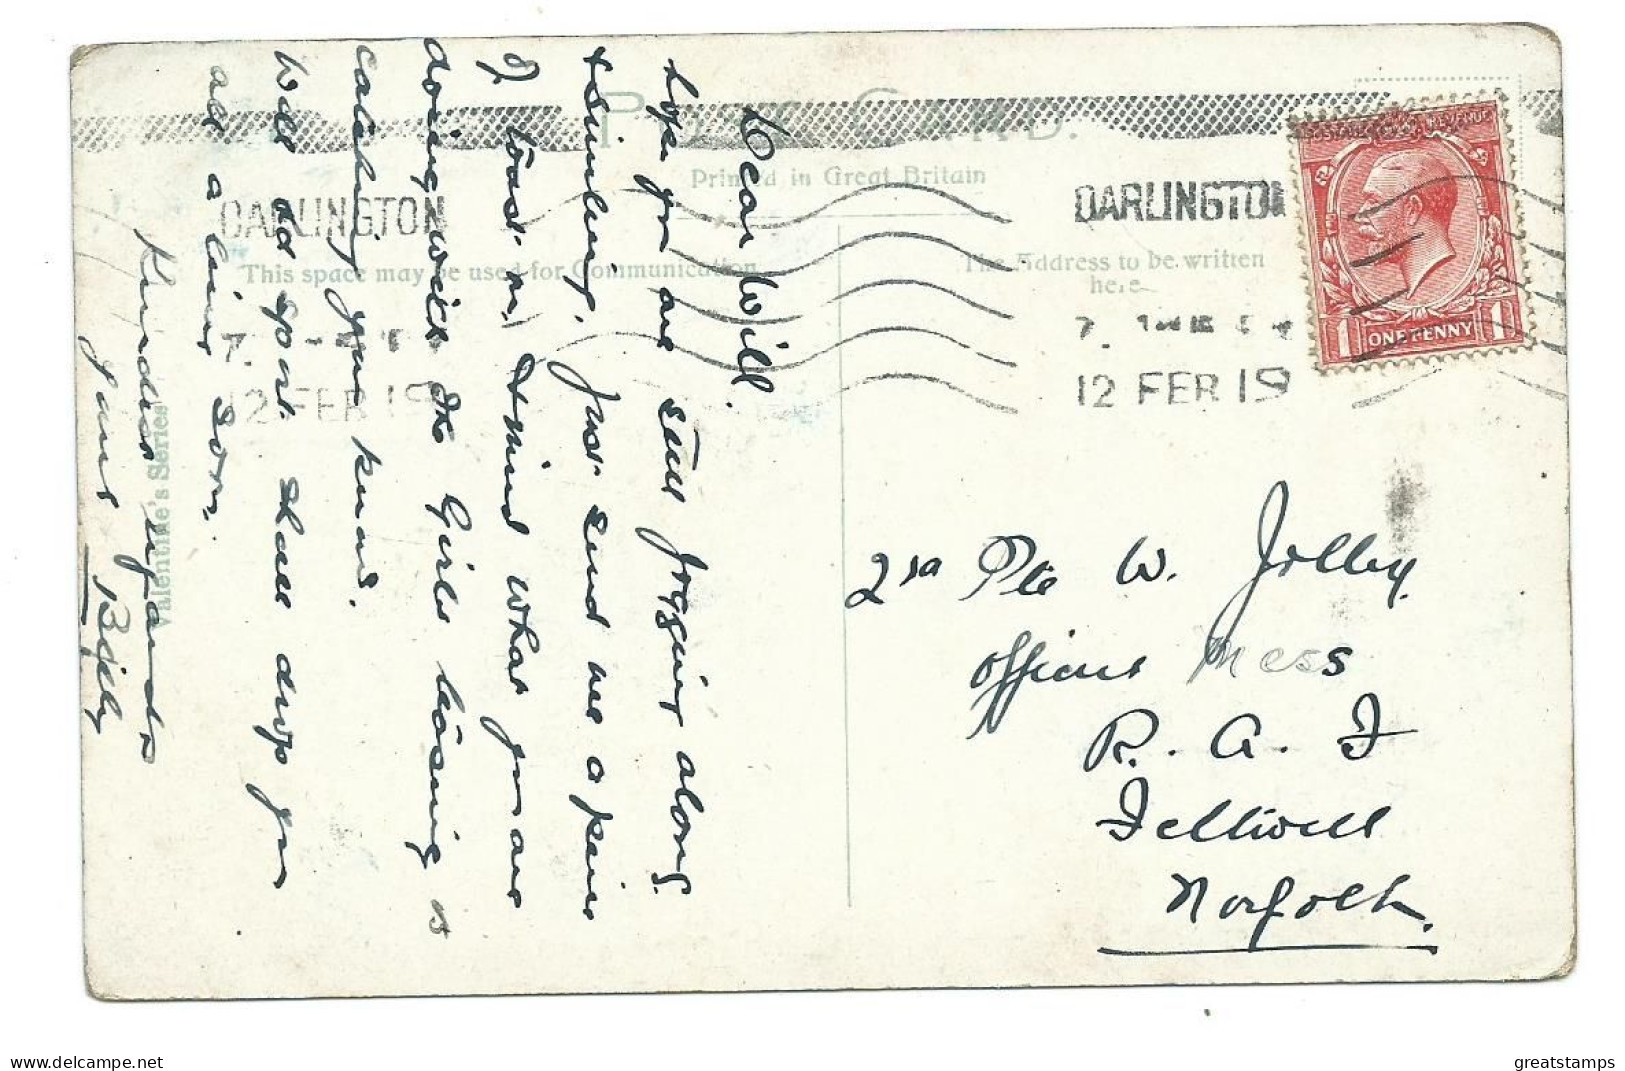 Durham Postcard Darlington Posted 1919 In North Lodge Park Darlington - Darlington